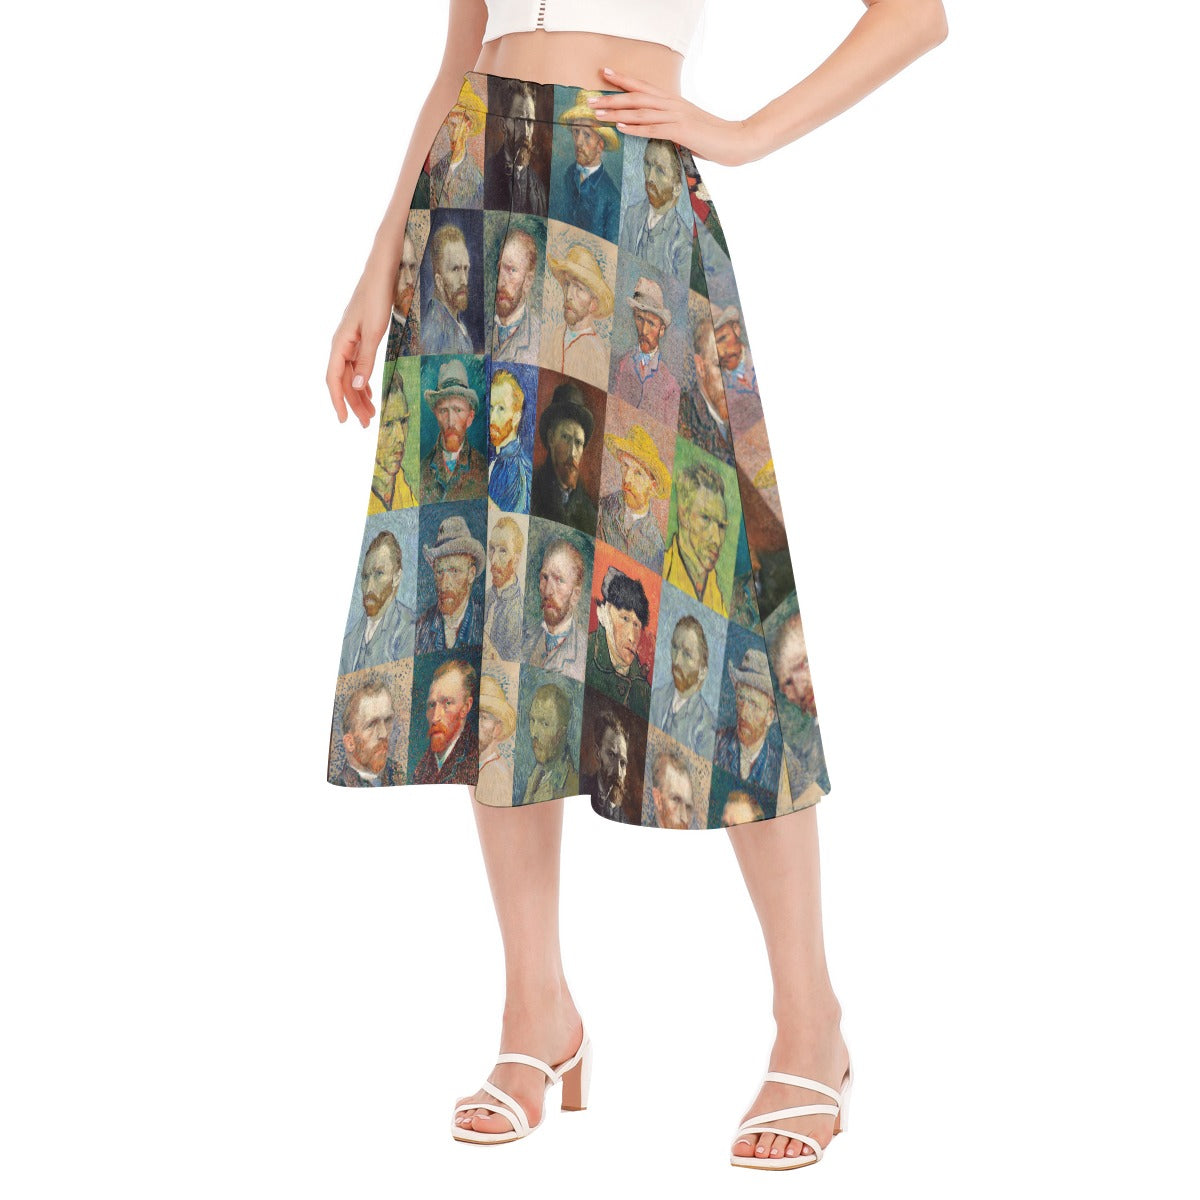 Elegant women's skirt with Van Gogh's self-portraits